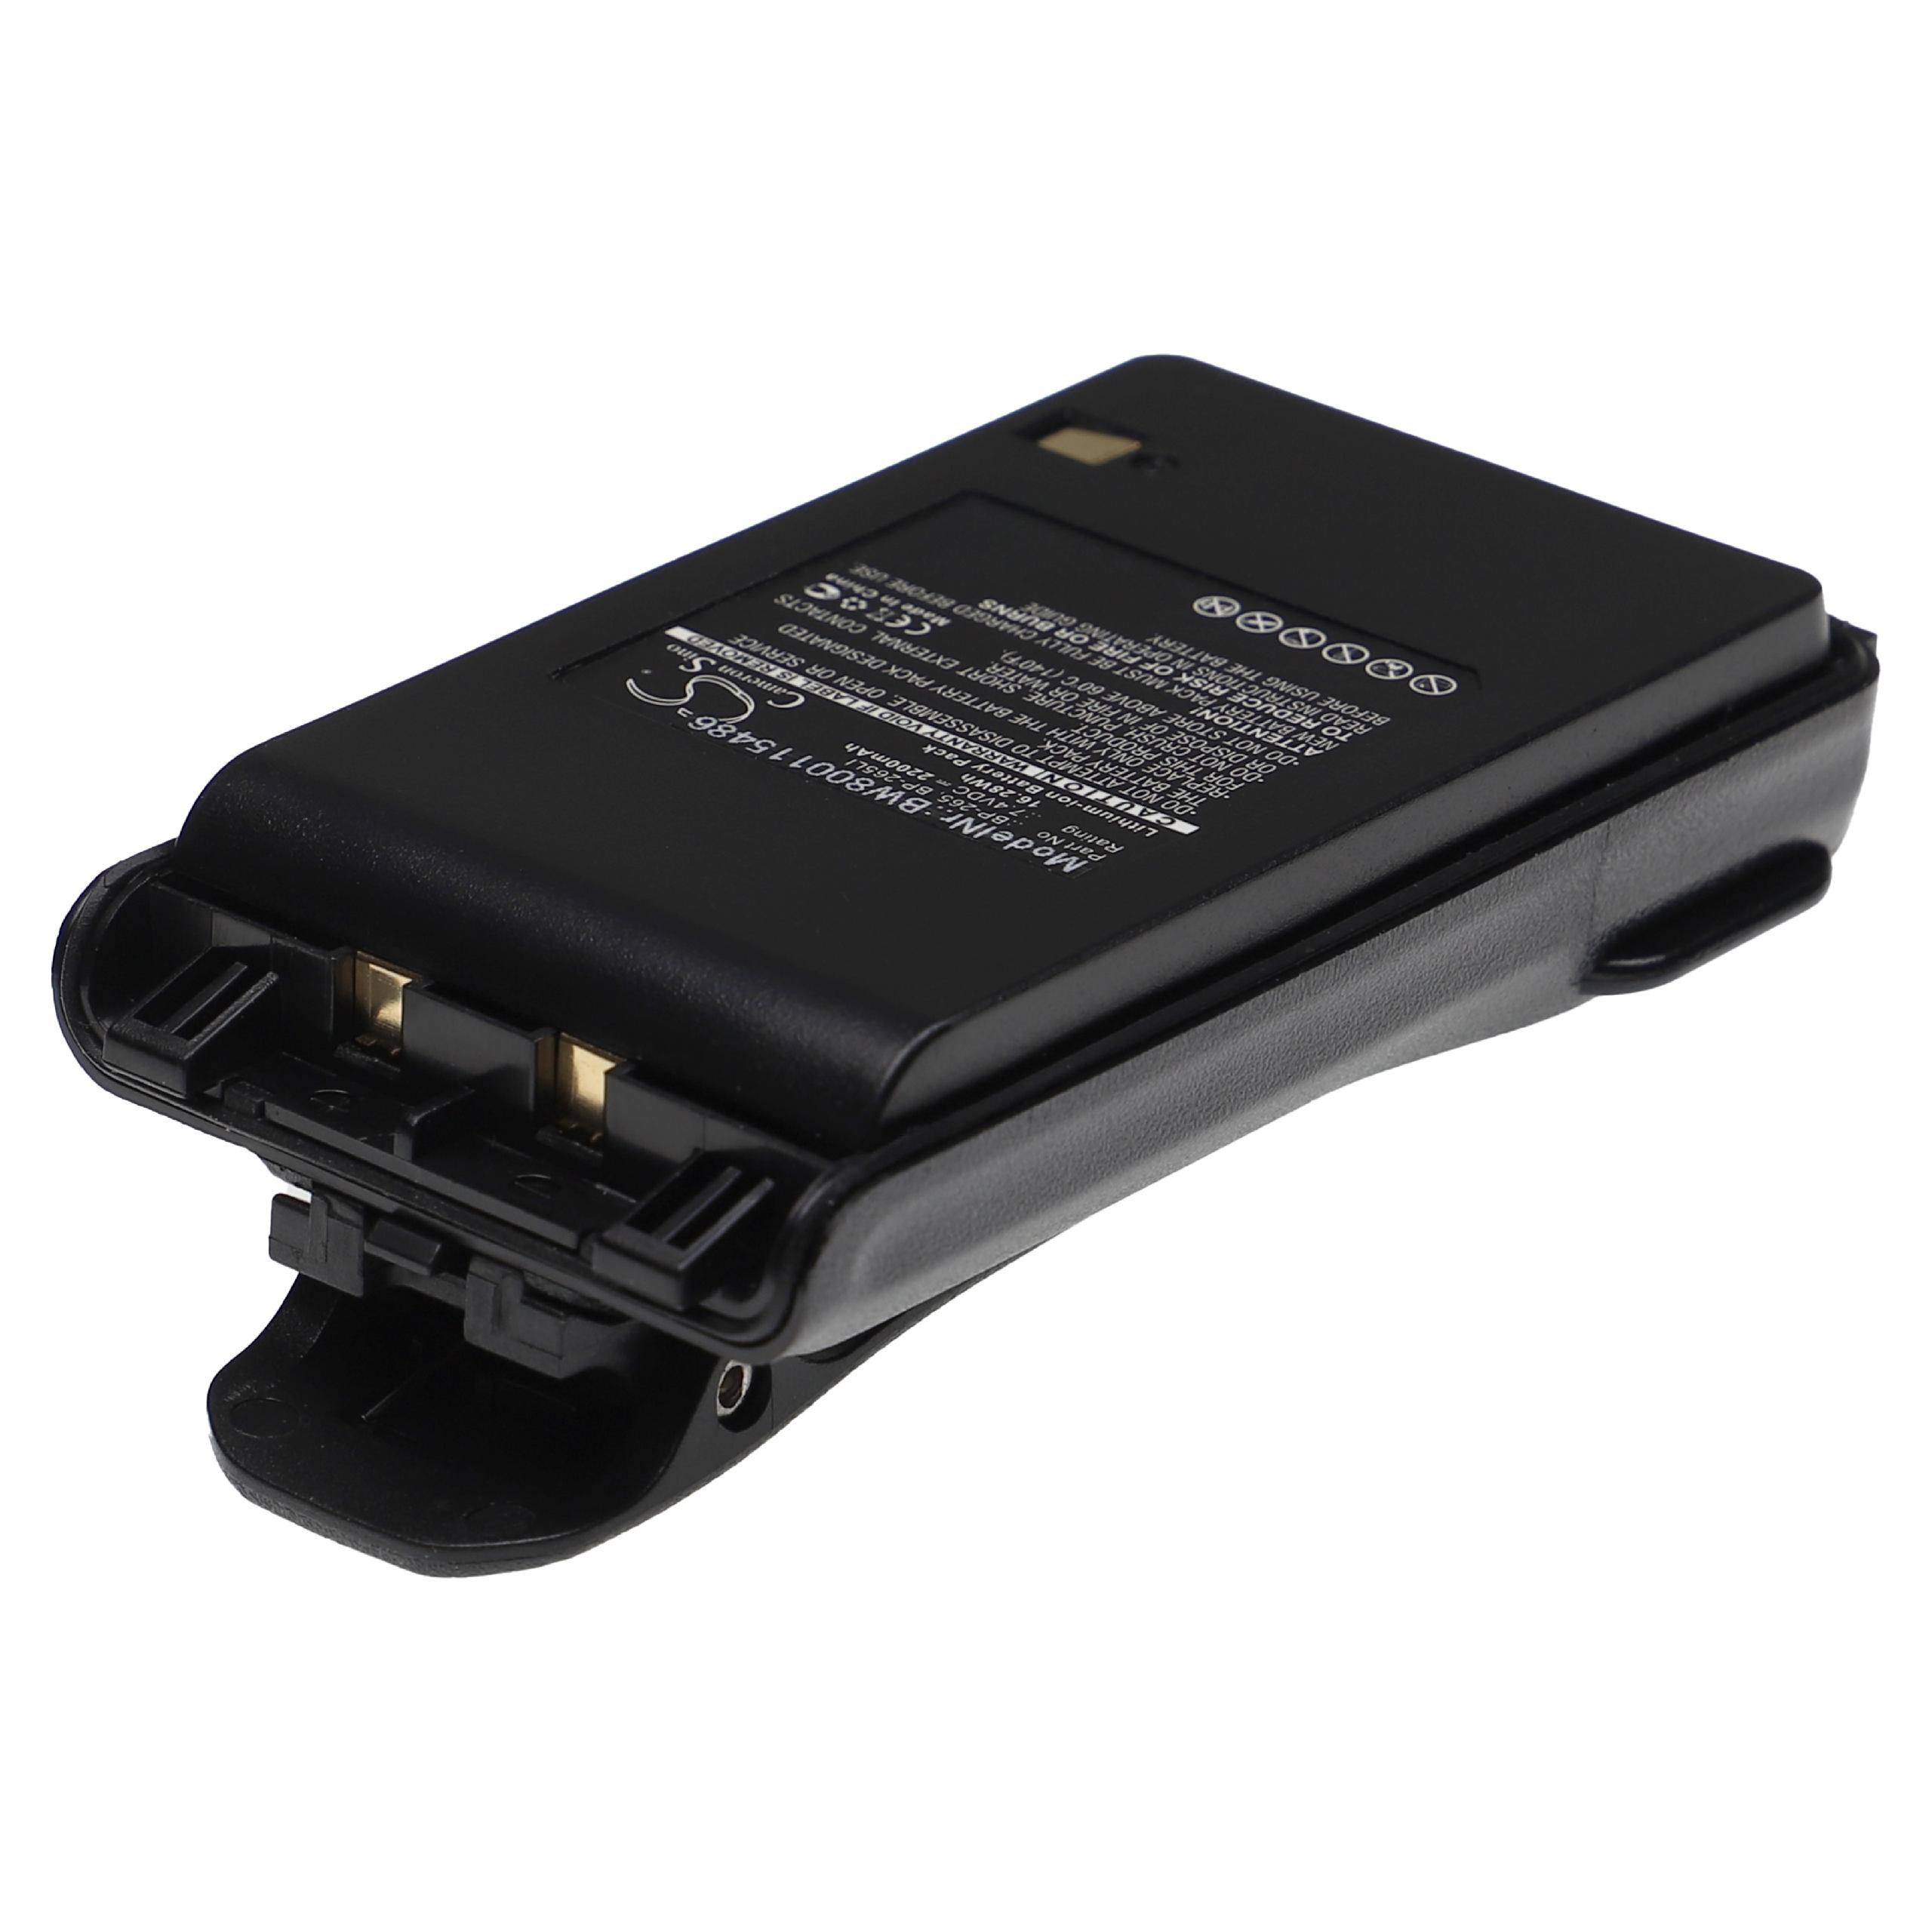 Batterie remplace Icom BP-265LI, BP-265 pour radio talkie-walkie - 2200mAh 7,4V Li-ion